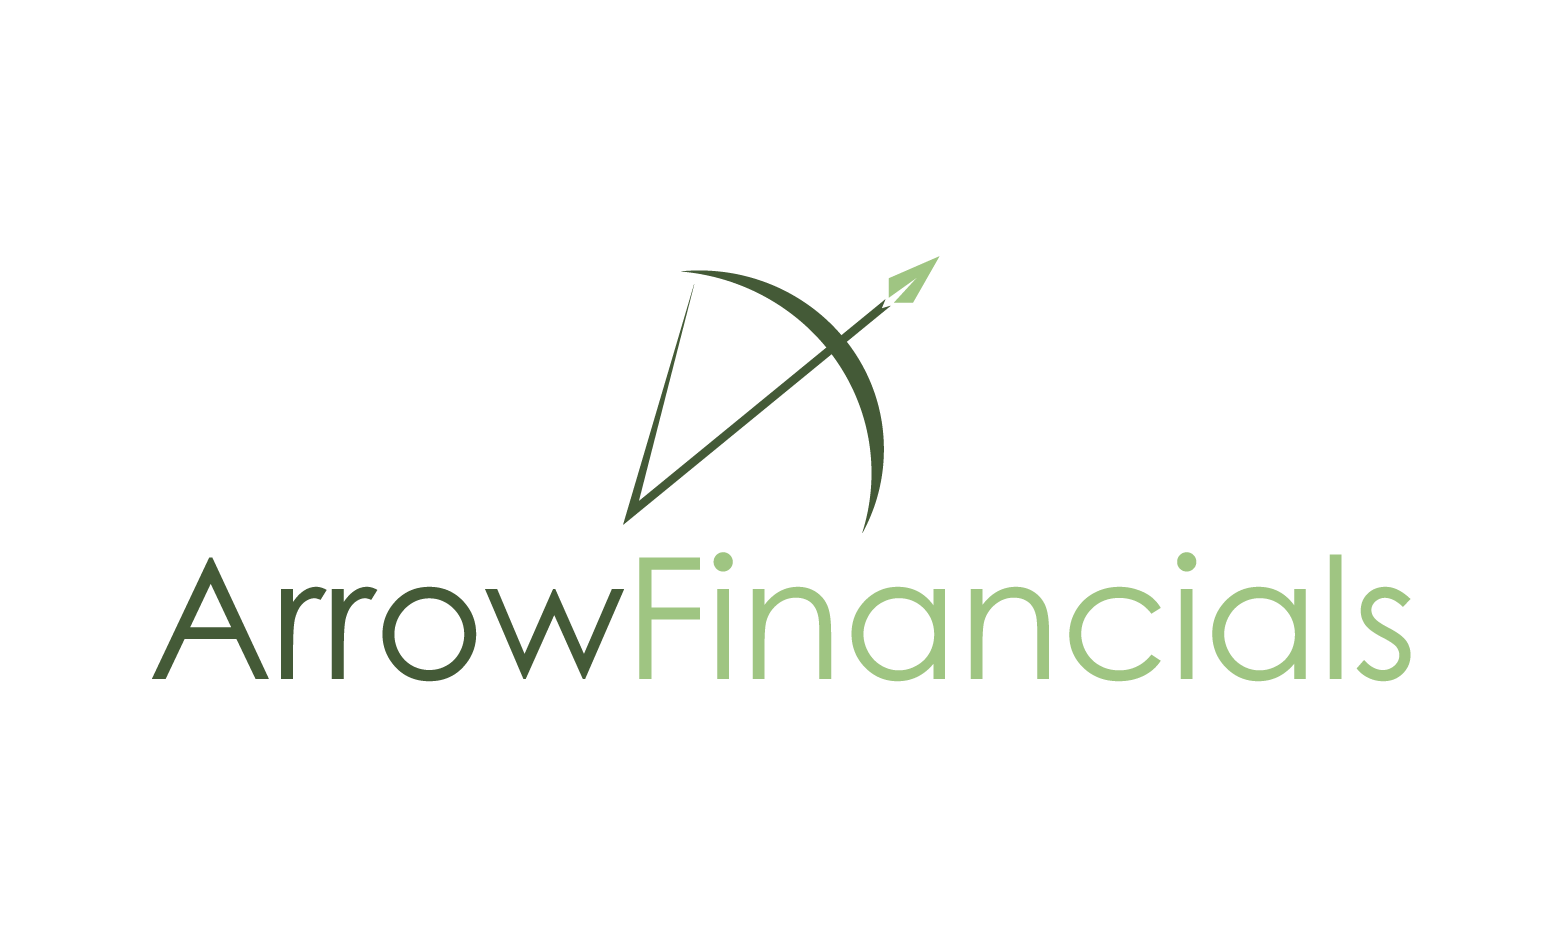 ArrowFinancials.com - Creative brandable domain for sale